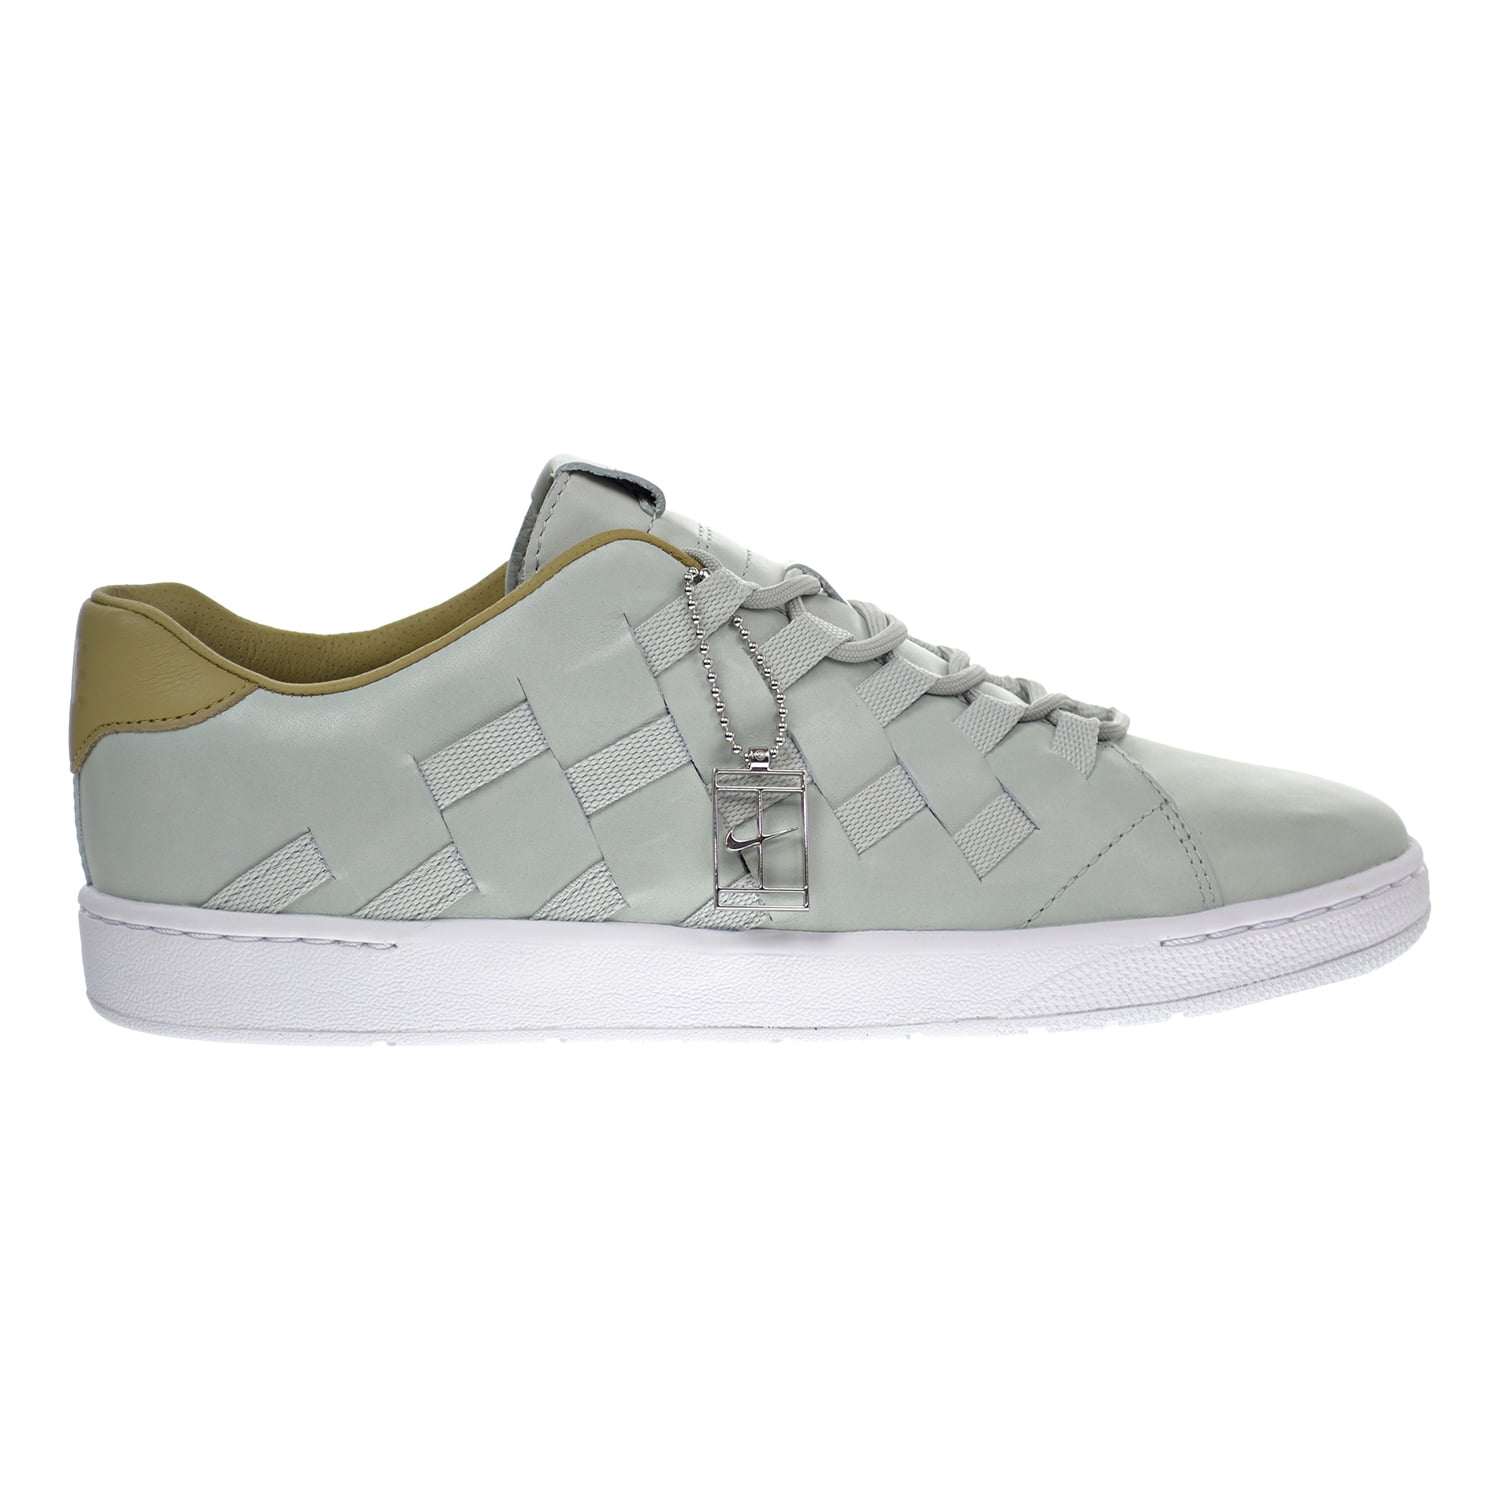 Nike Tennis Classic Ultra PRM QS Men's Shoes Silver/Hay/White830699-003 (11.5 D(M) US) - Walmart.com